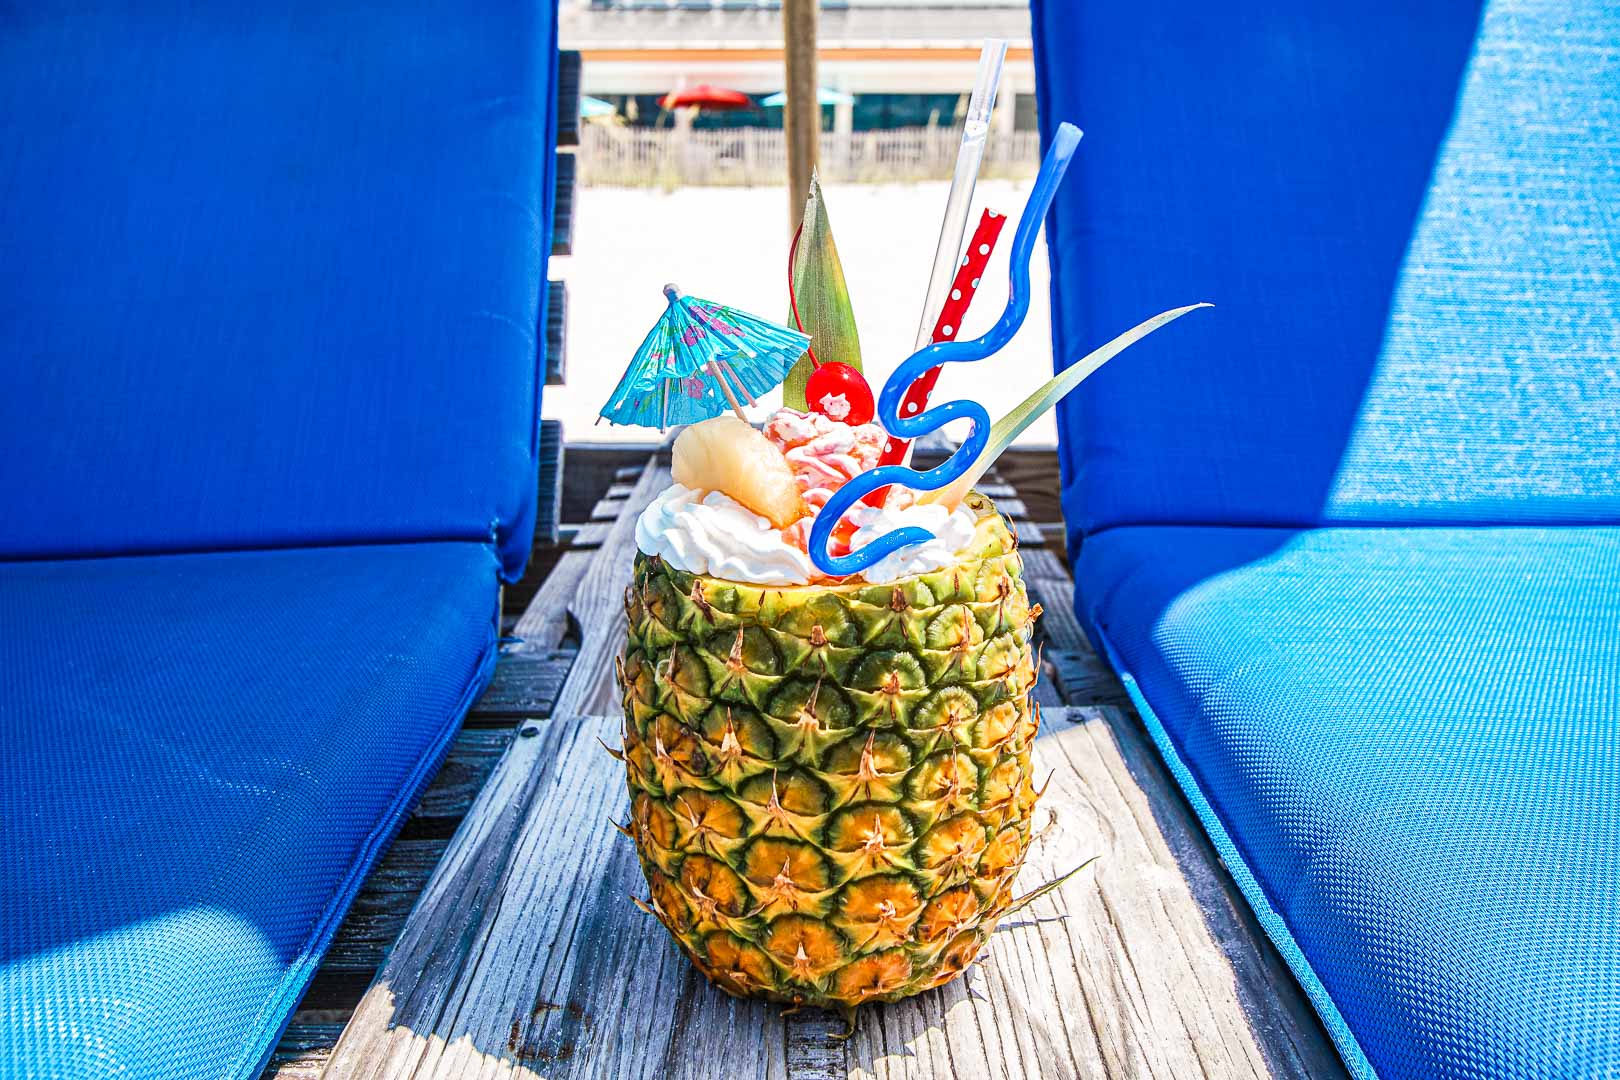 Refreshing Pina colada drinks at VRI's Landmark Holiday Beach Resort in Panama City, Florida.